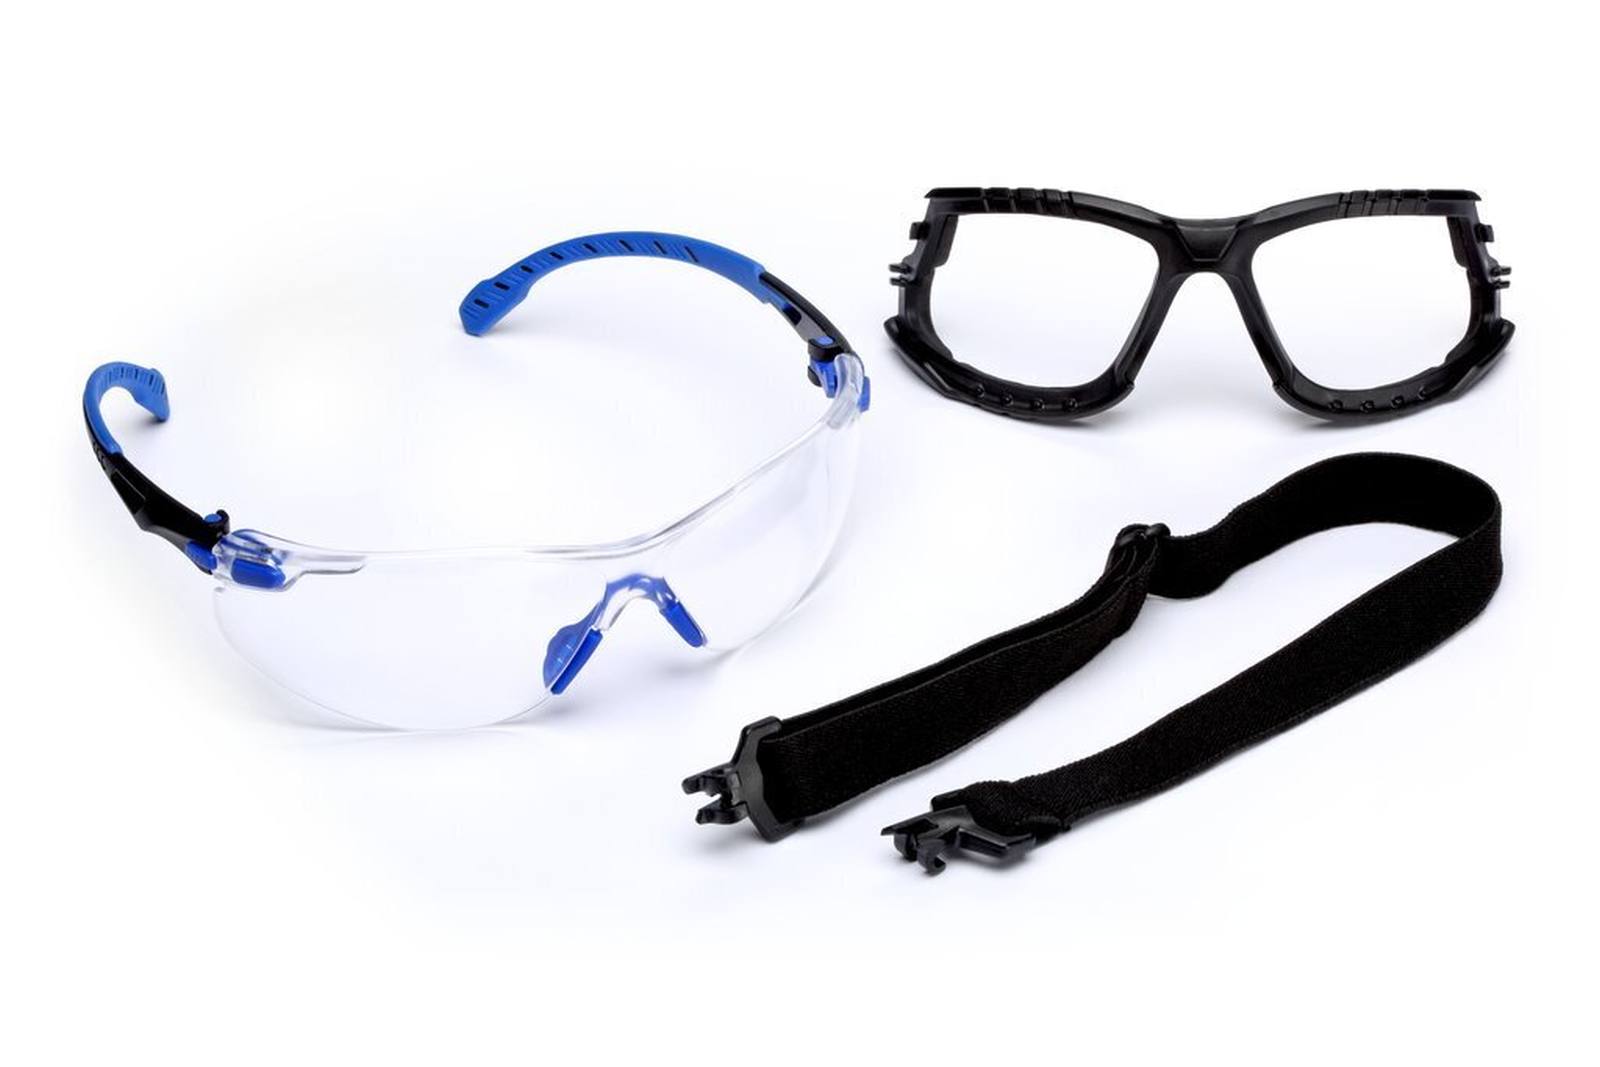 occhiali di sicurezza 3M Solus 1000, aste blu/nere, rivestimento Scotchgard antiappannamento/antigraffio (K&amp;N), lenti chiare, montatura e fascia in schiuma, S1101SGAFKT-EU